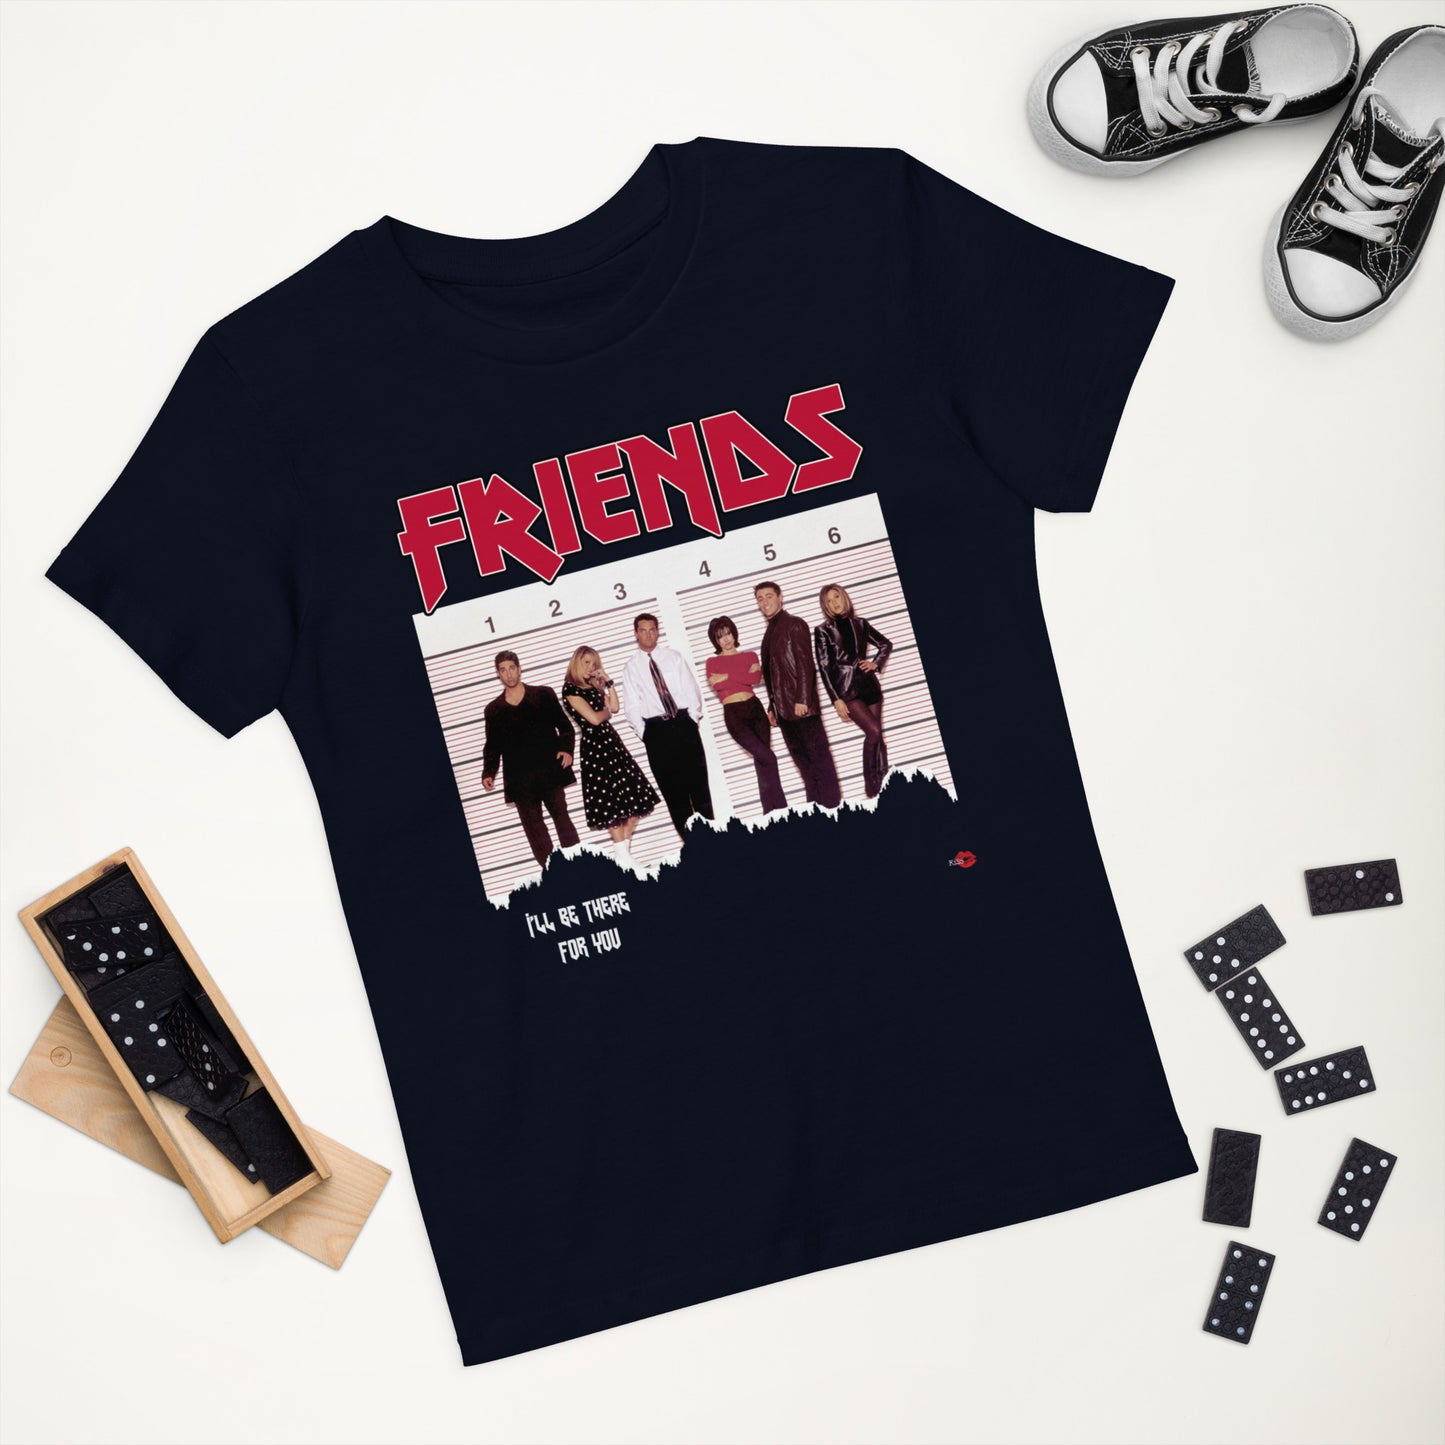 Friends 'Band Tee' Tour 94 KiSS Organic cotton kids t-shirt - New York City Tour Rock theme tv show